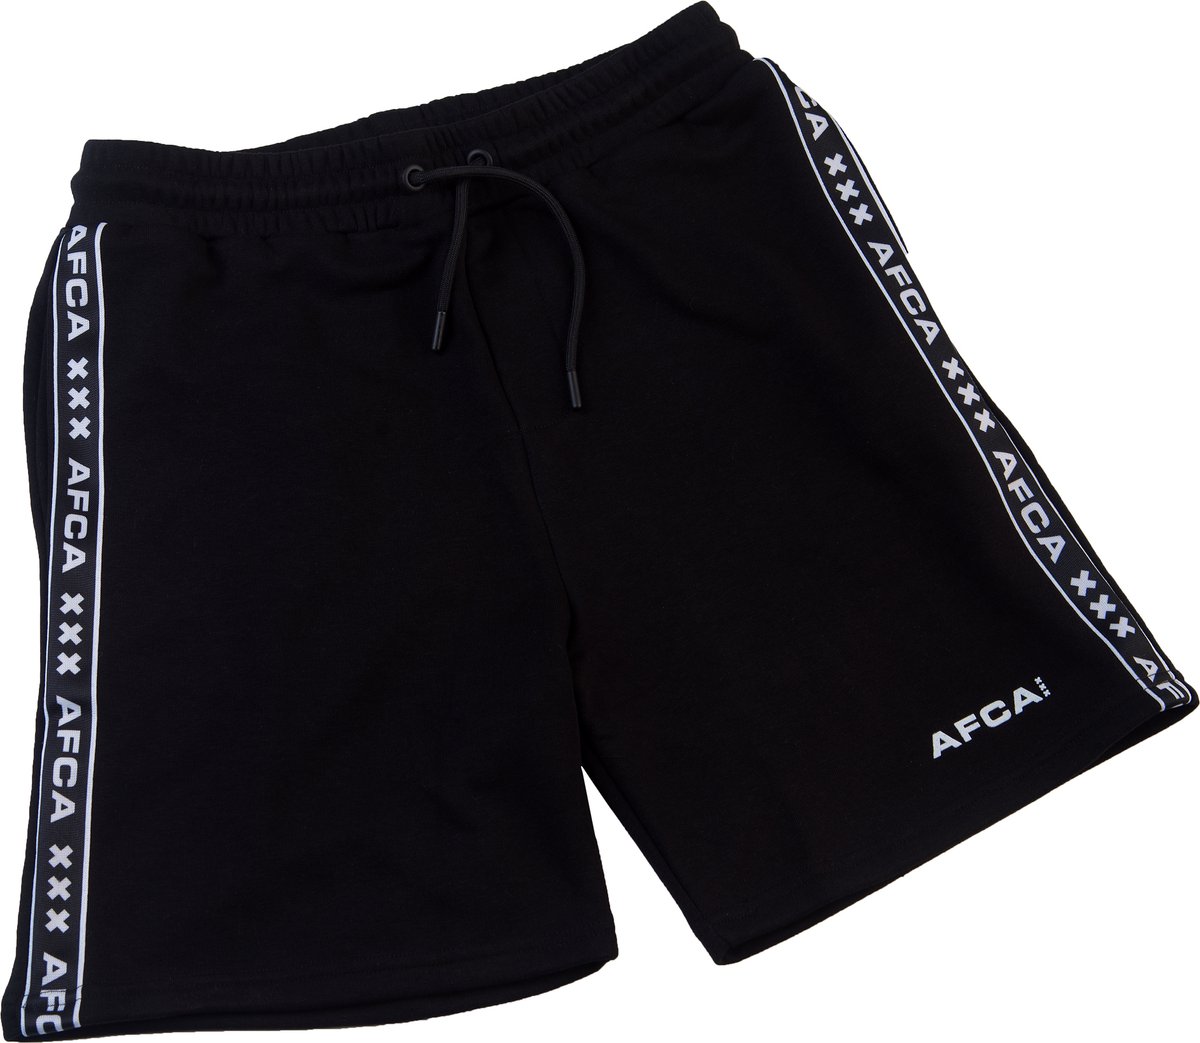 Short AFCA XXX black - korte broek - Ajax - Amsterdam - fanwear - AFCA - zomercollectie